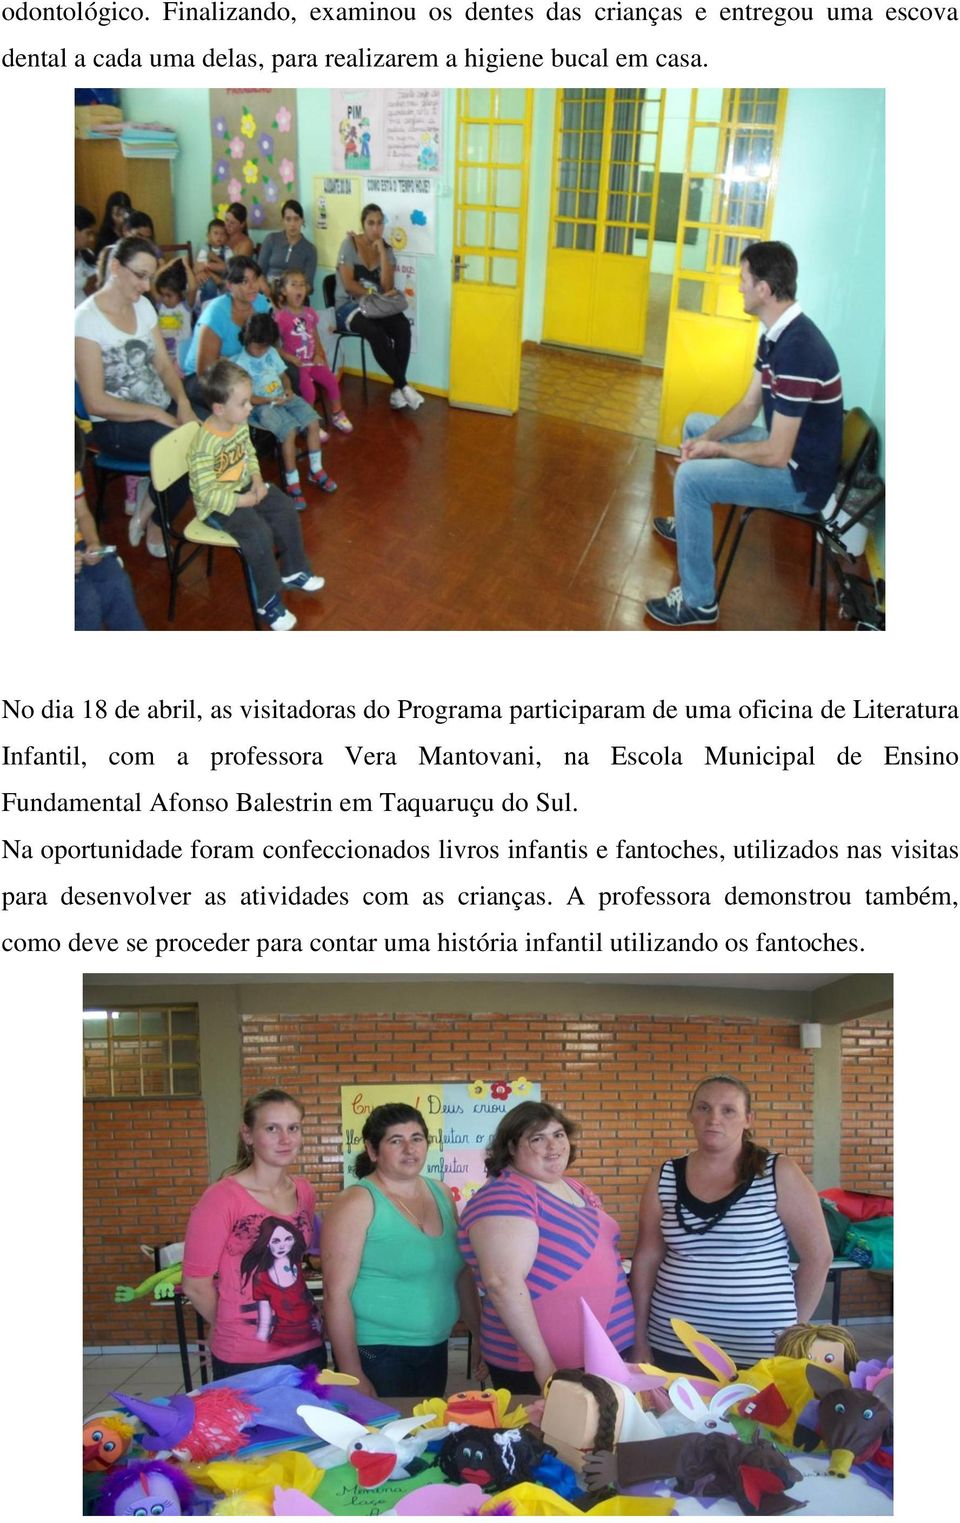 de Ensino Fundamental Afonso Balestrin em Taquaruçu do Sul.